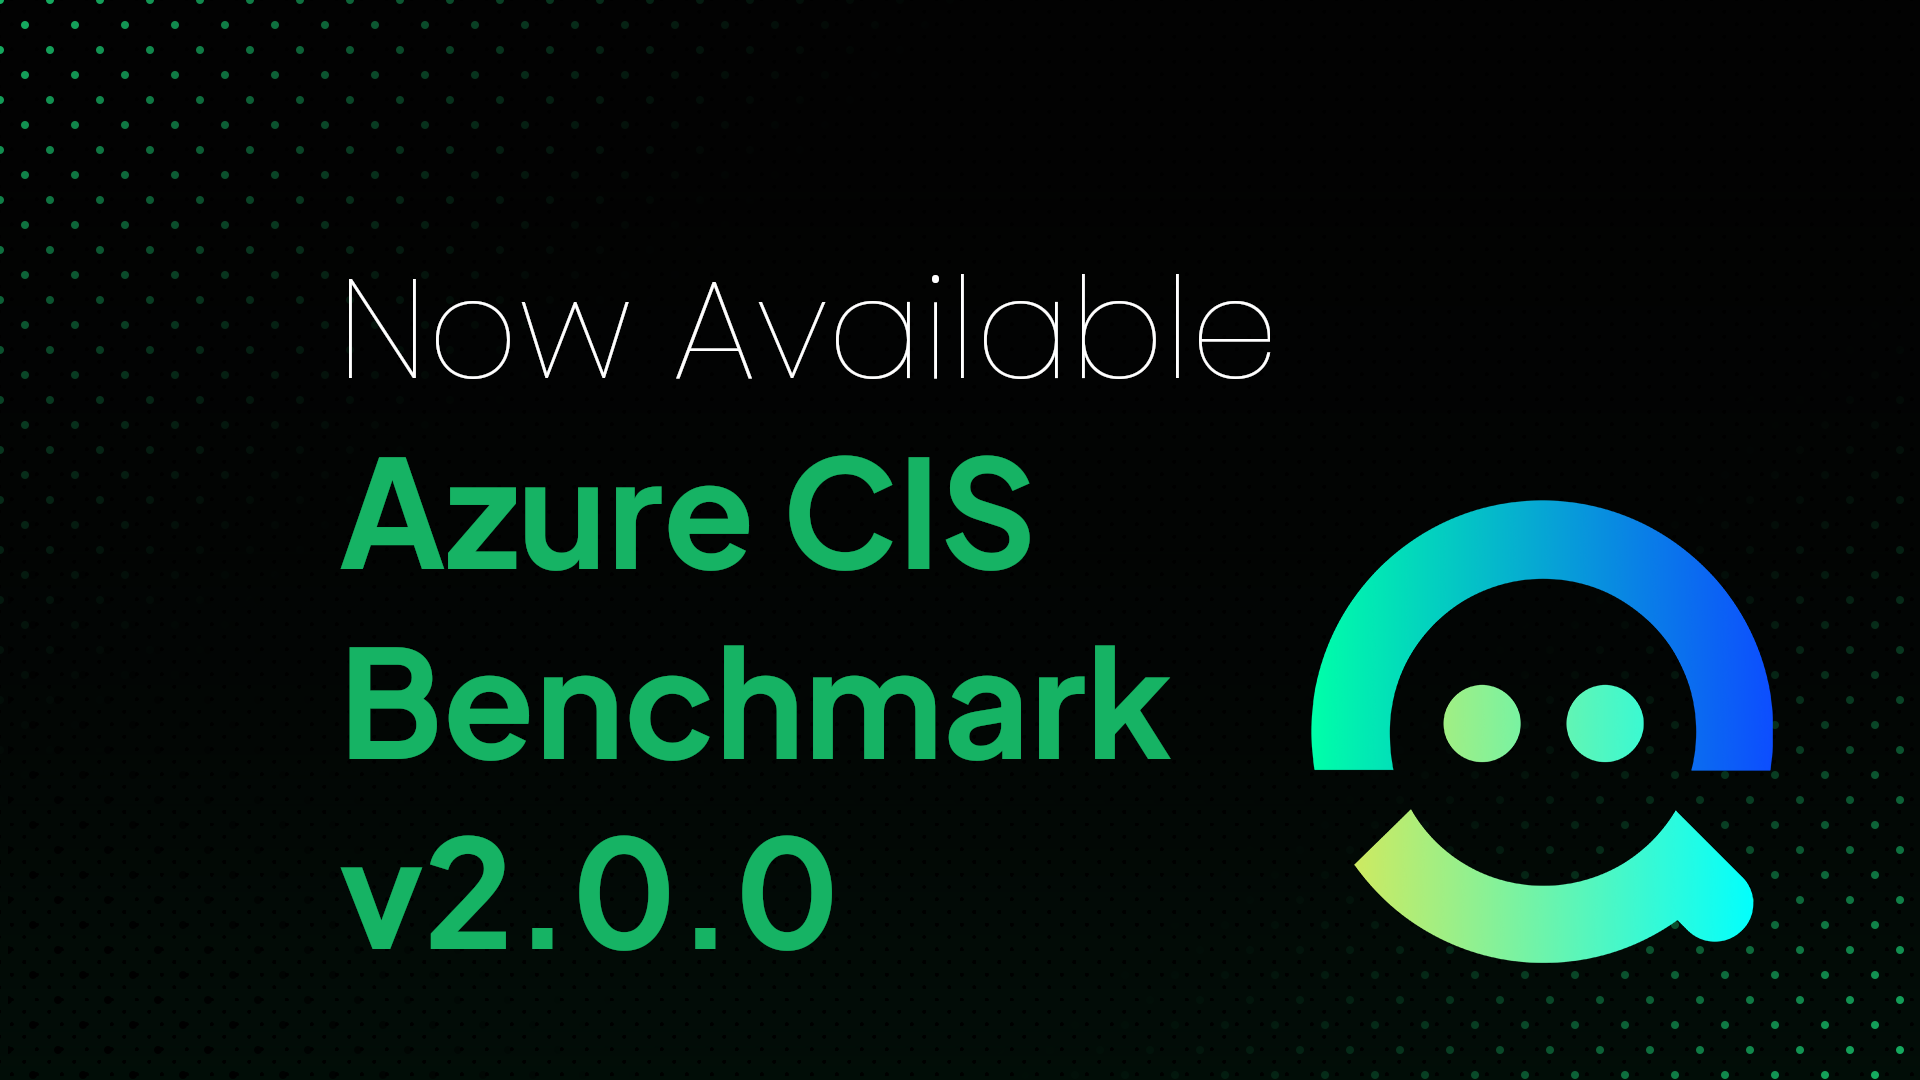 Header Image: Azure CIS Benchmark v2.0.0 Now Available